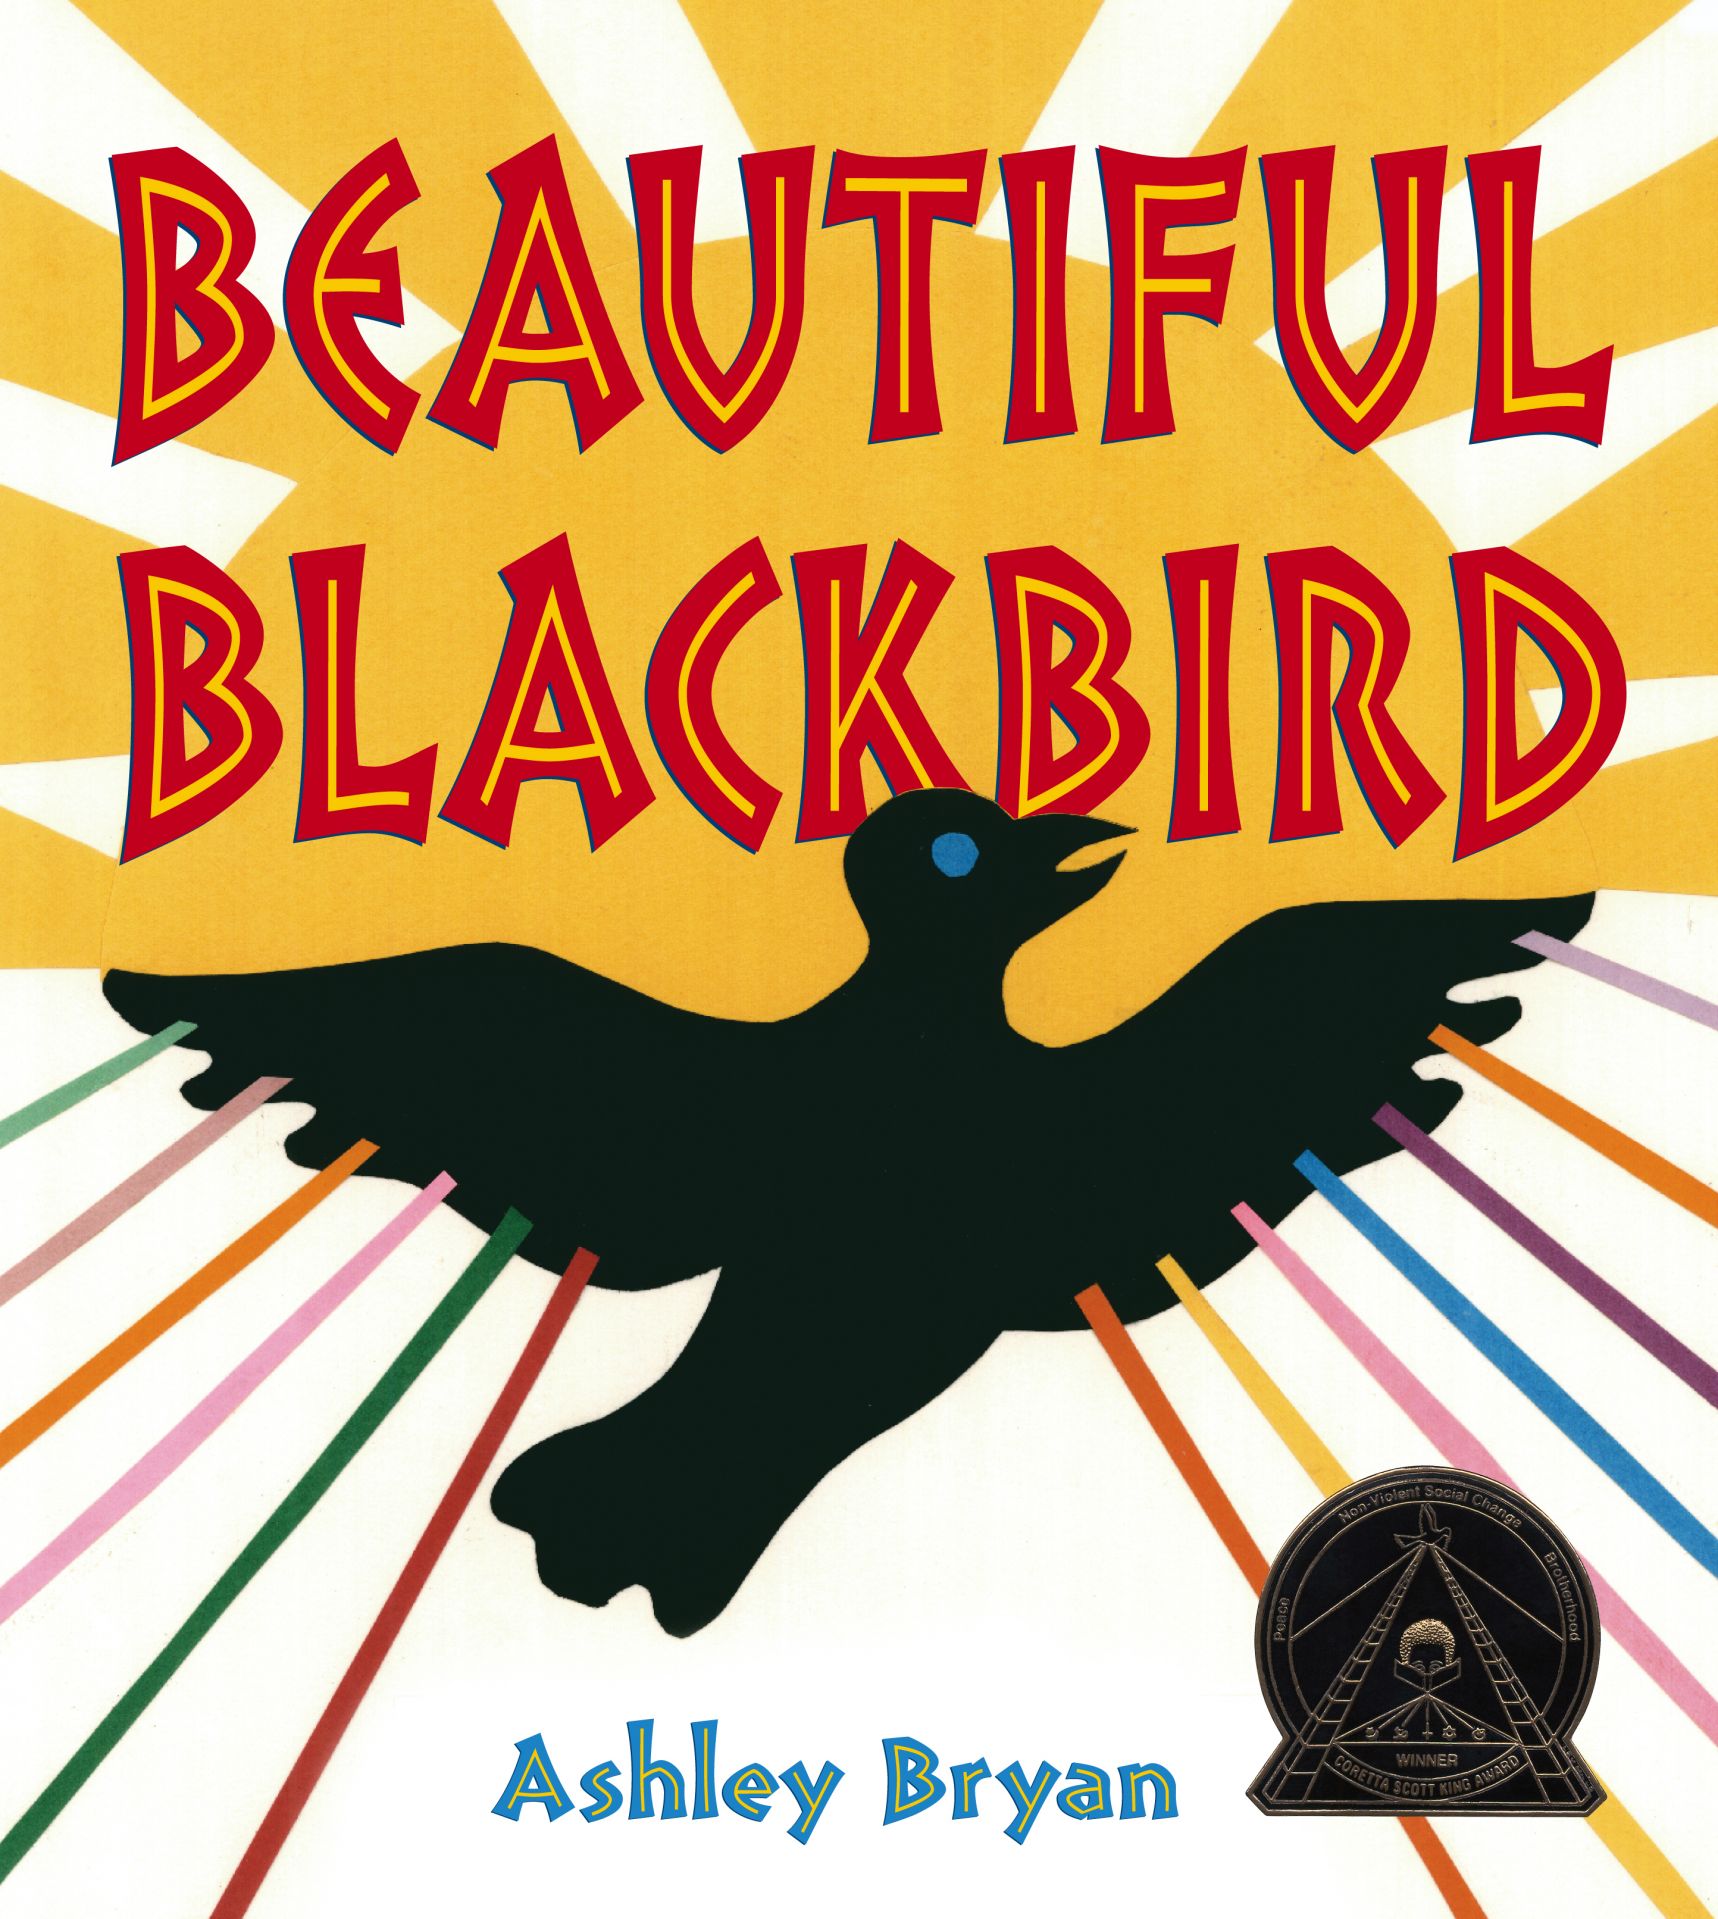 ashley bryan reading beautiful blackbird